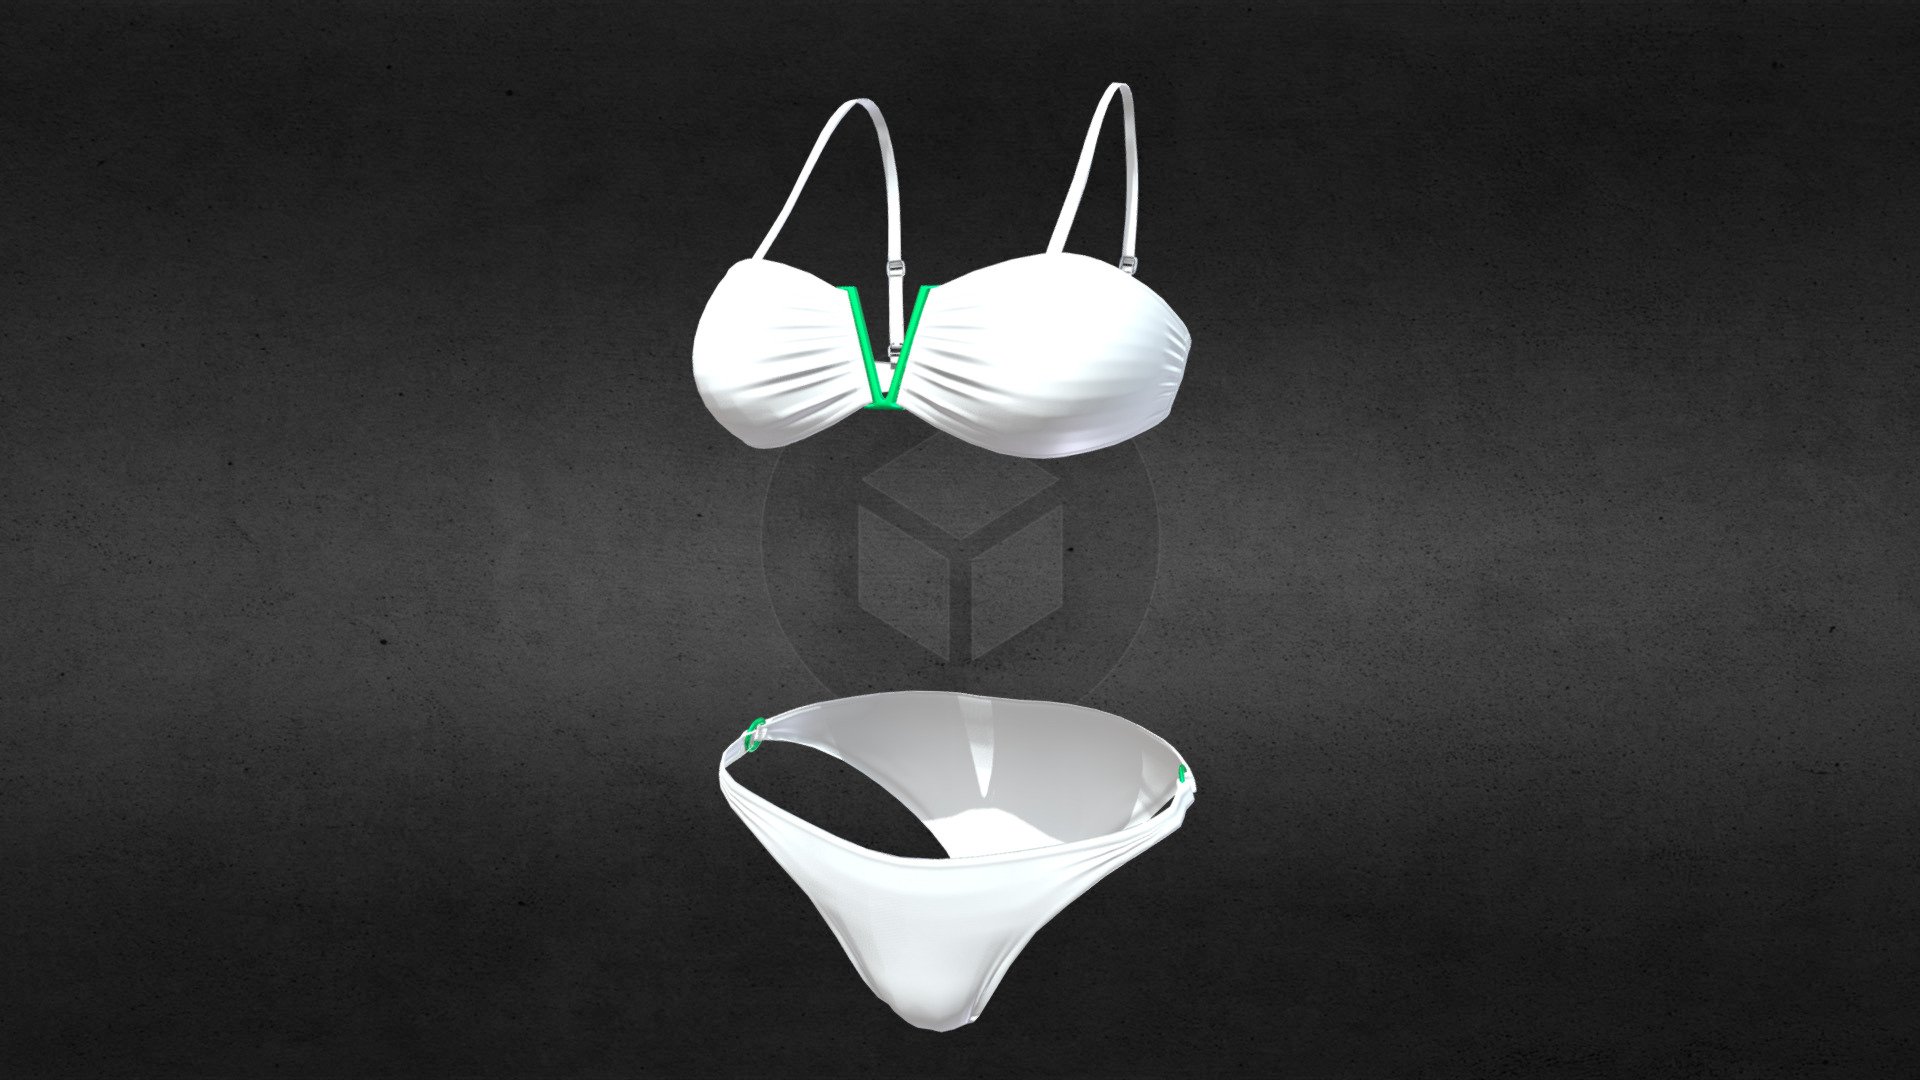 I made a 3D object of V-wire bikini 3d model